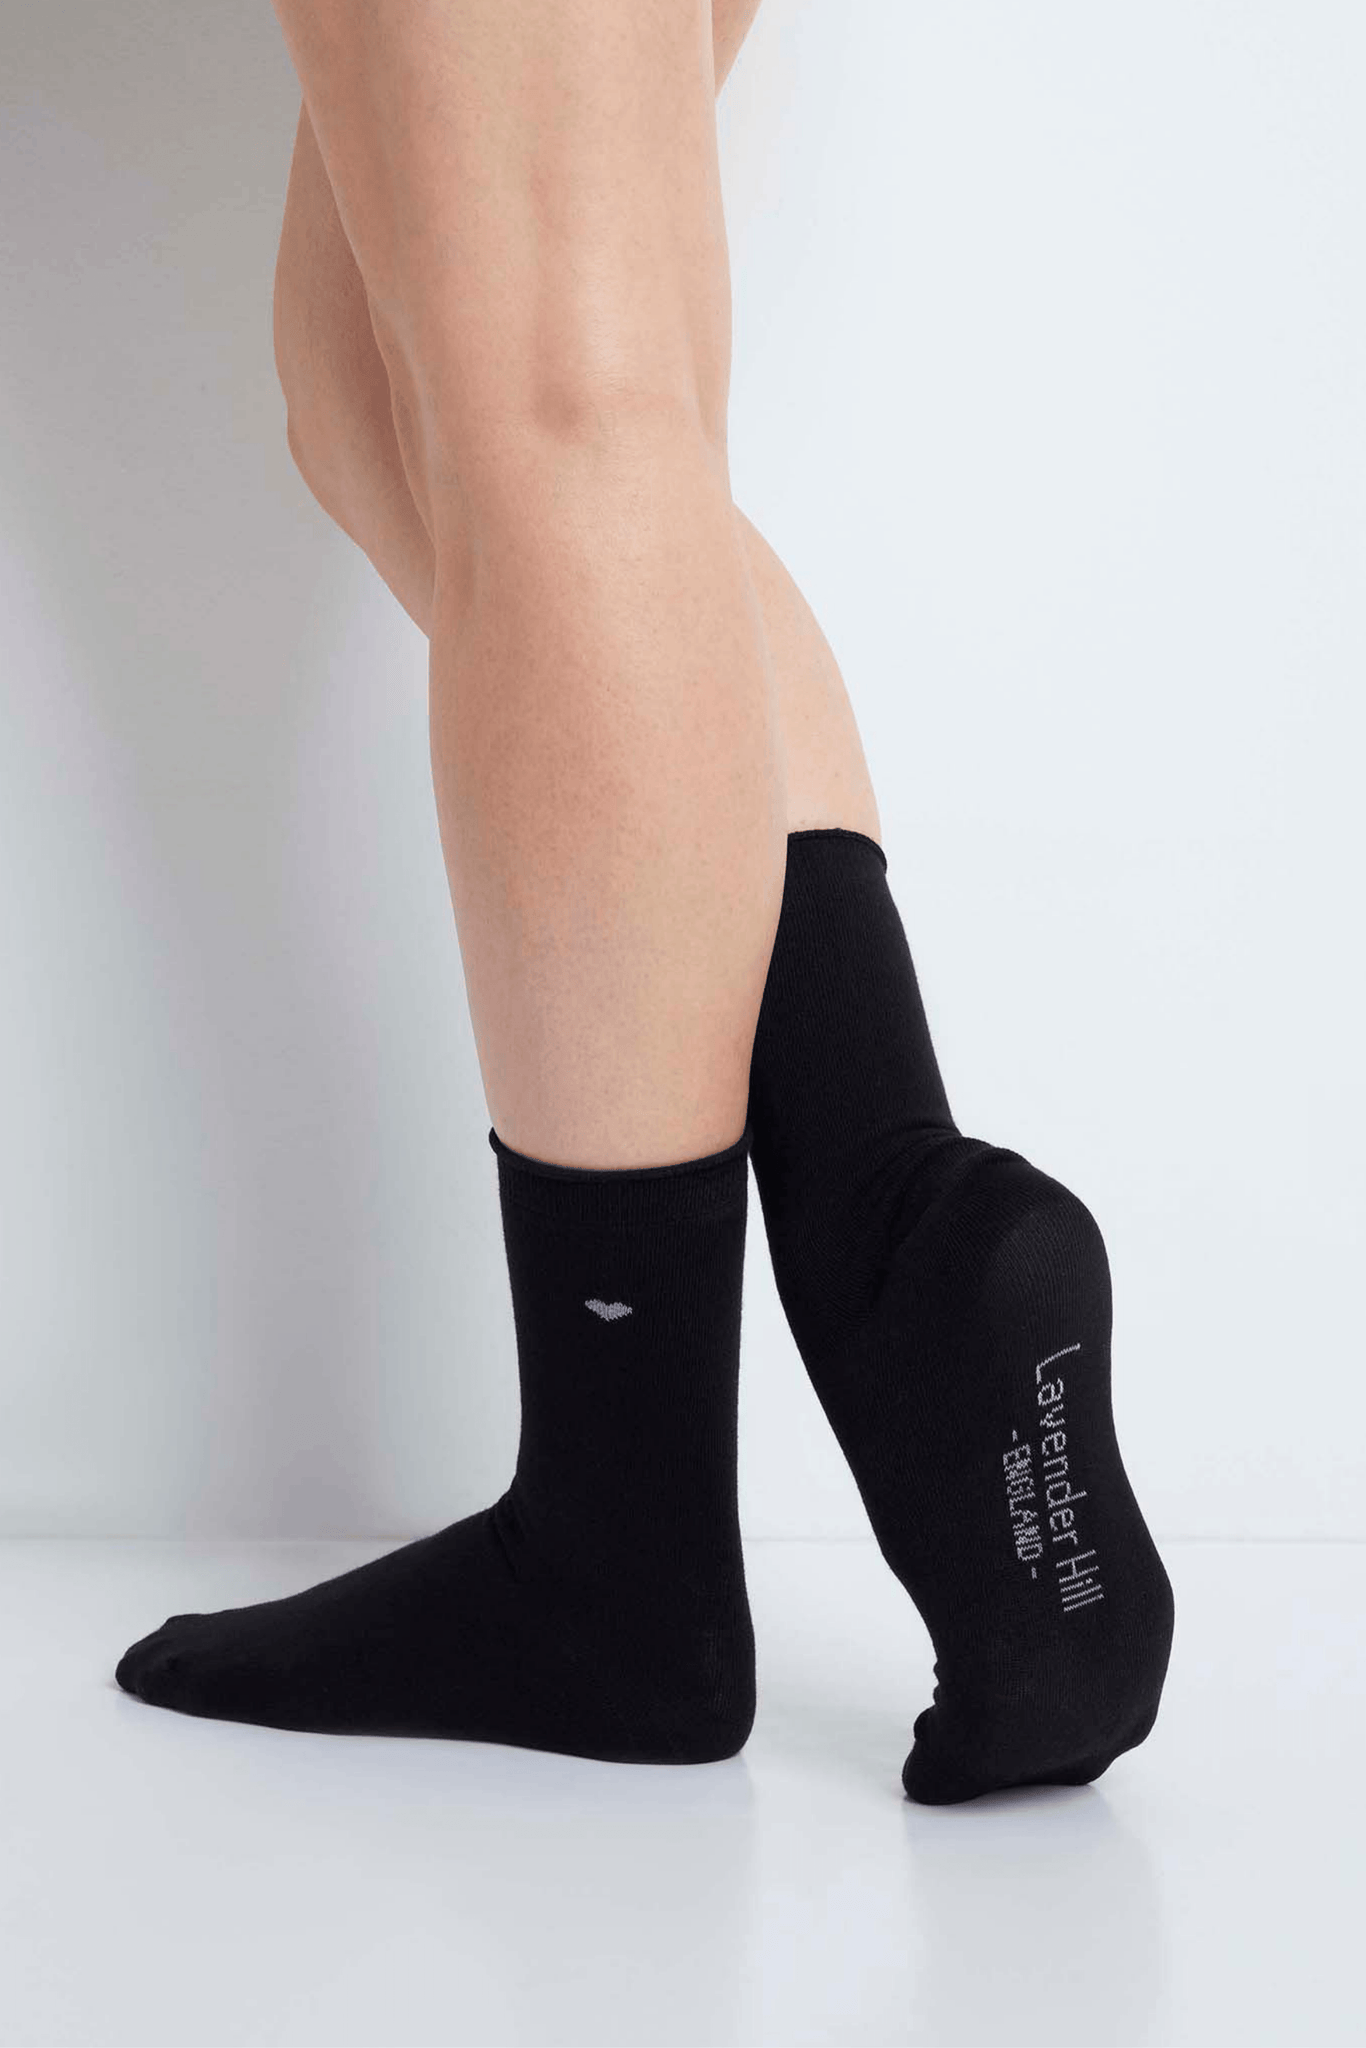  Merino.tech Thin Merino Wool Socks for Women and Men - Merino  Wool Running Socks Quarter Style (Black Marble Pack of 2, 3-5) : Clothing,  Shoes & Jewelry